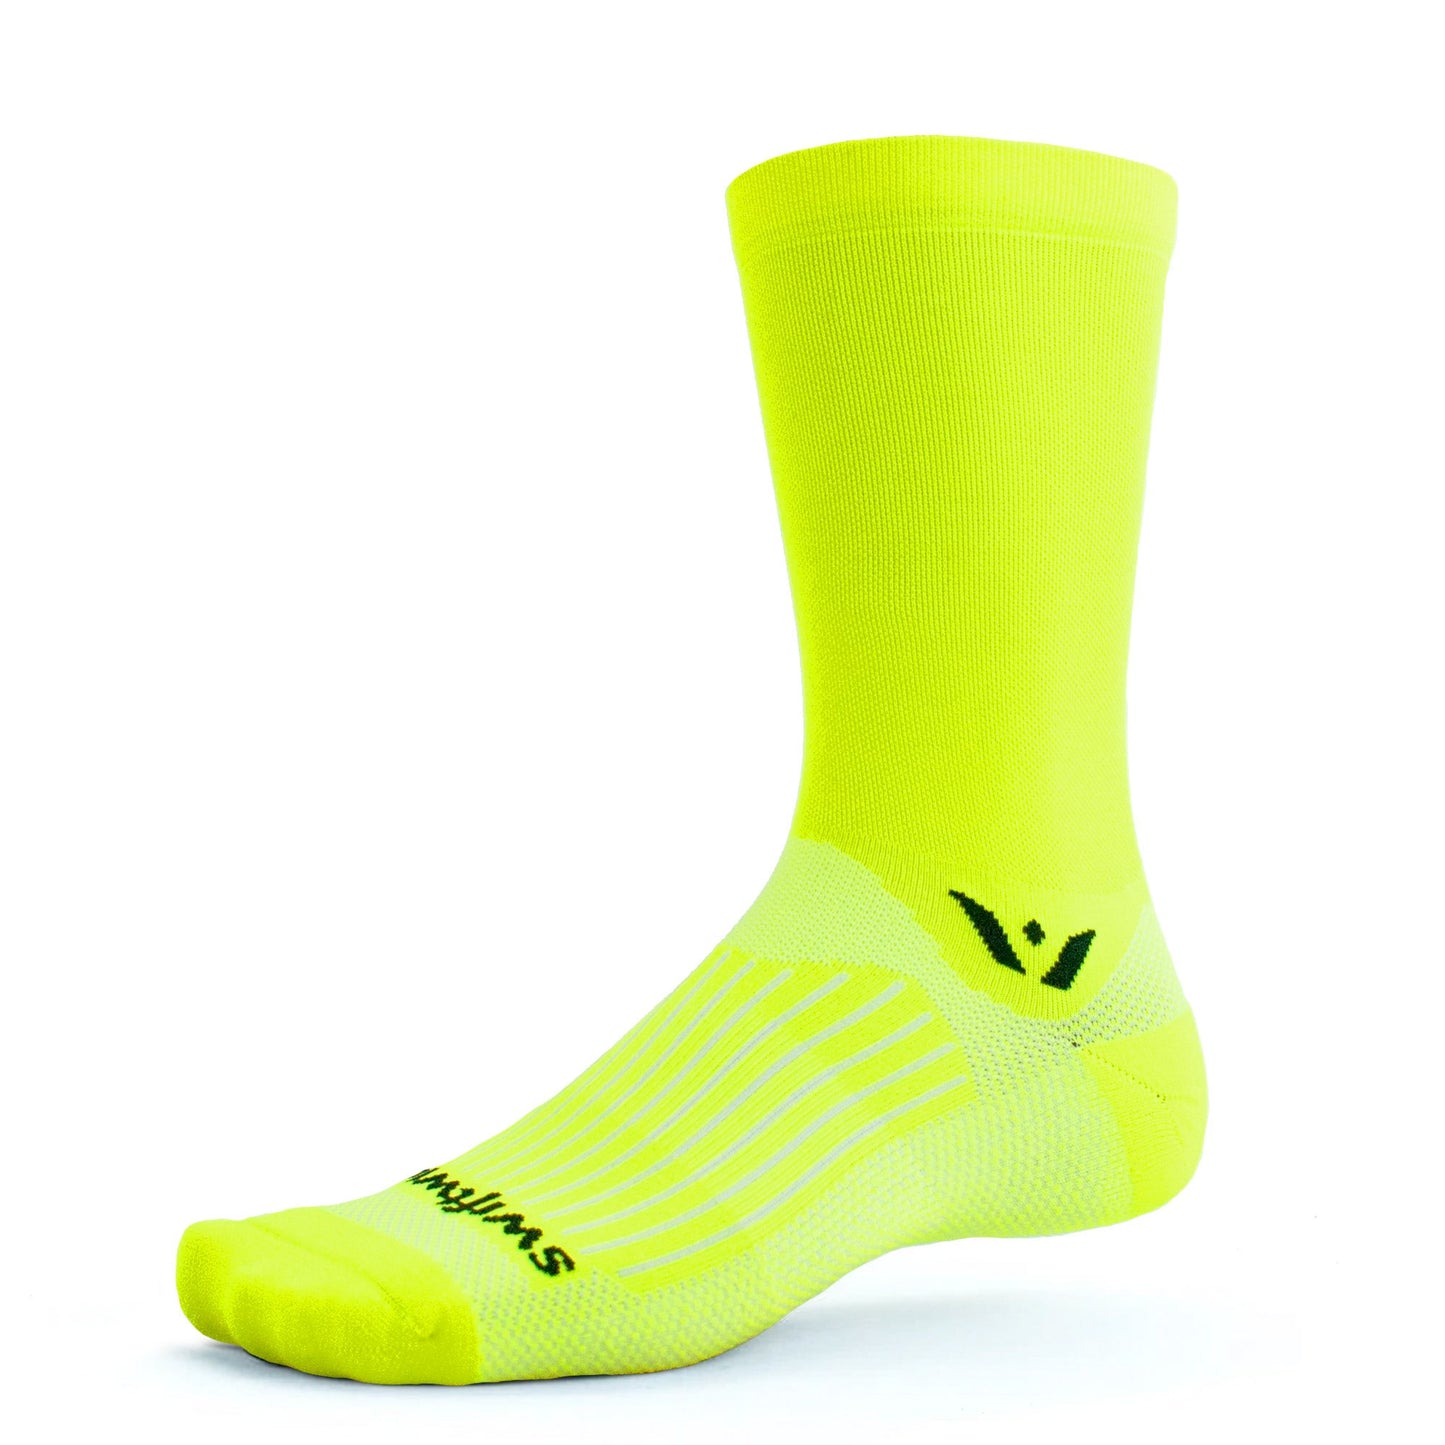 Swiftwick Aspire Seven Unisex Cycling Socks - Hi-Viz Yellow